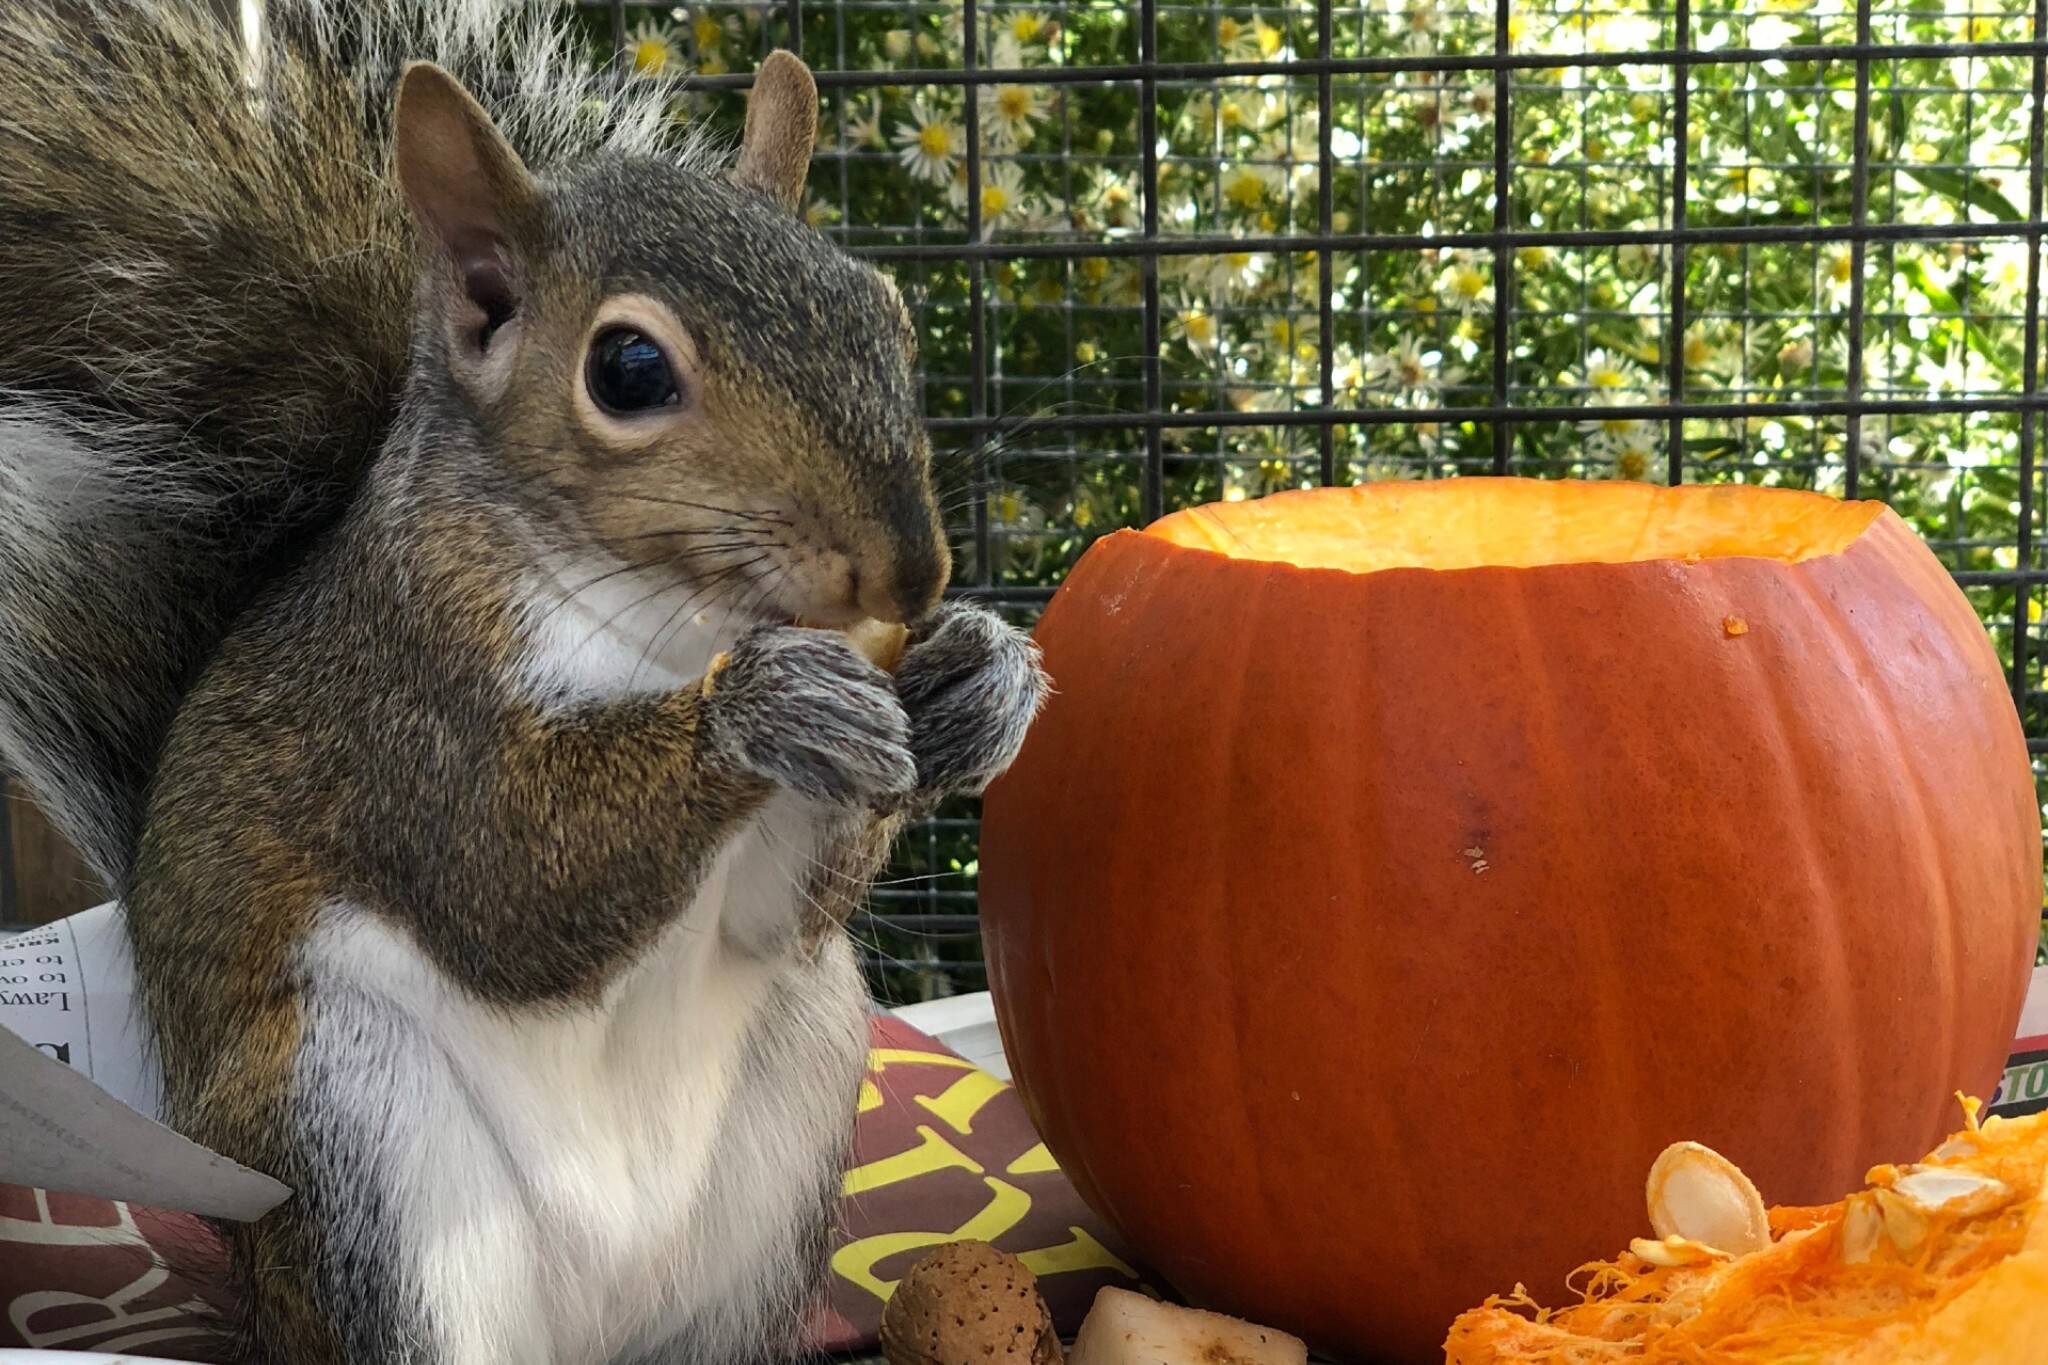 Toronto wildlife experts warn that bleaching pumpkins could kill animals